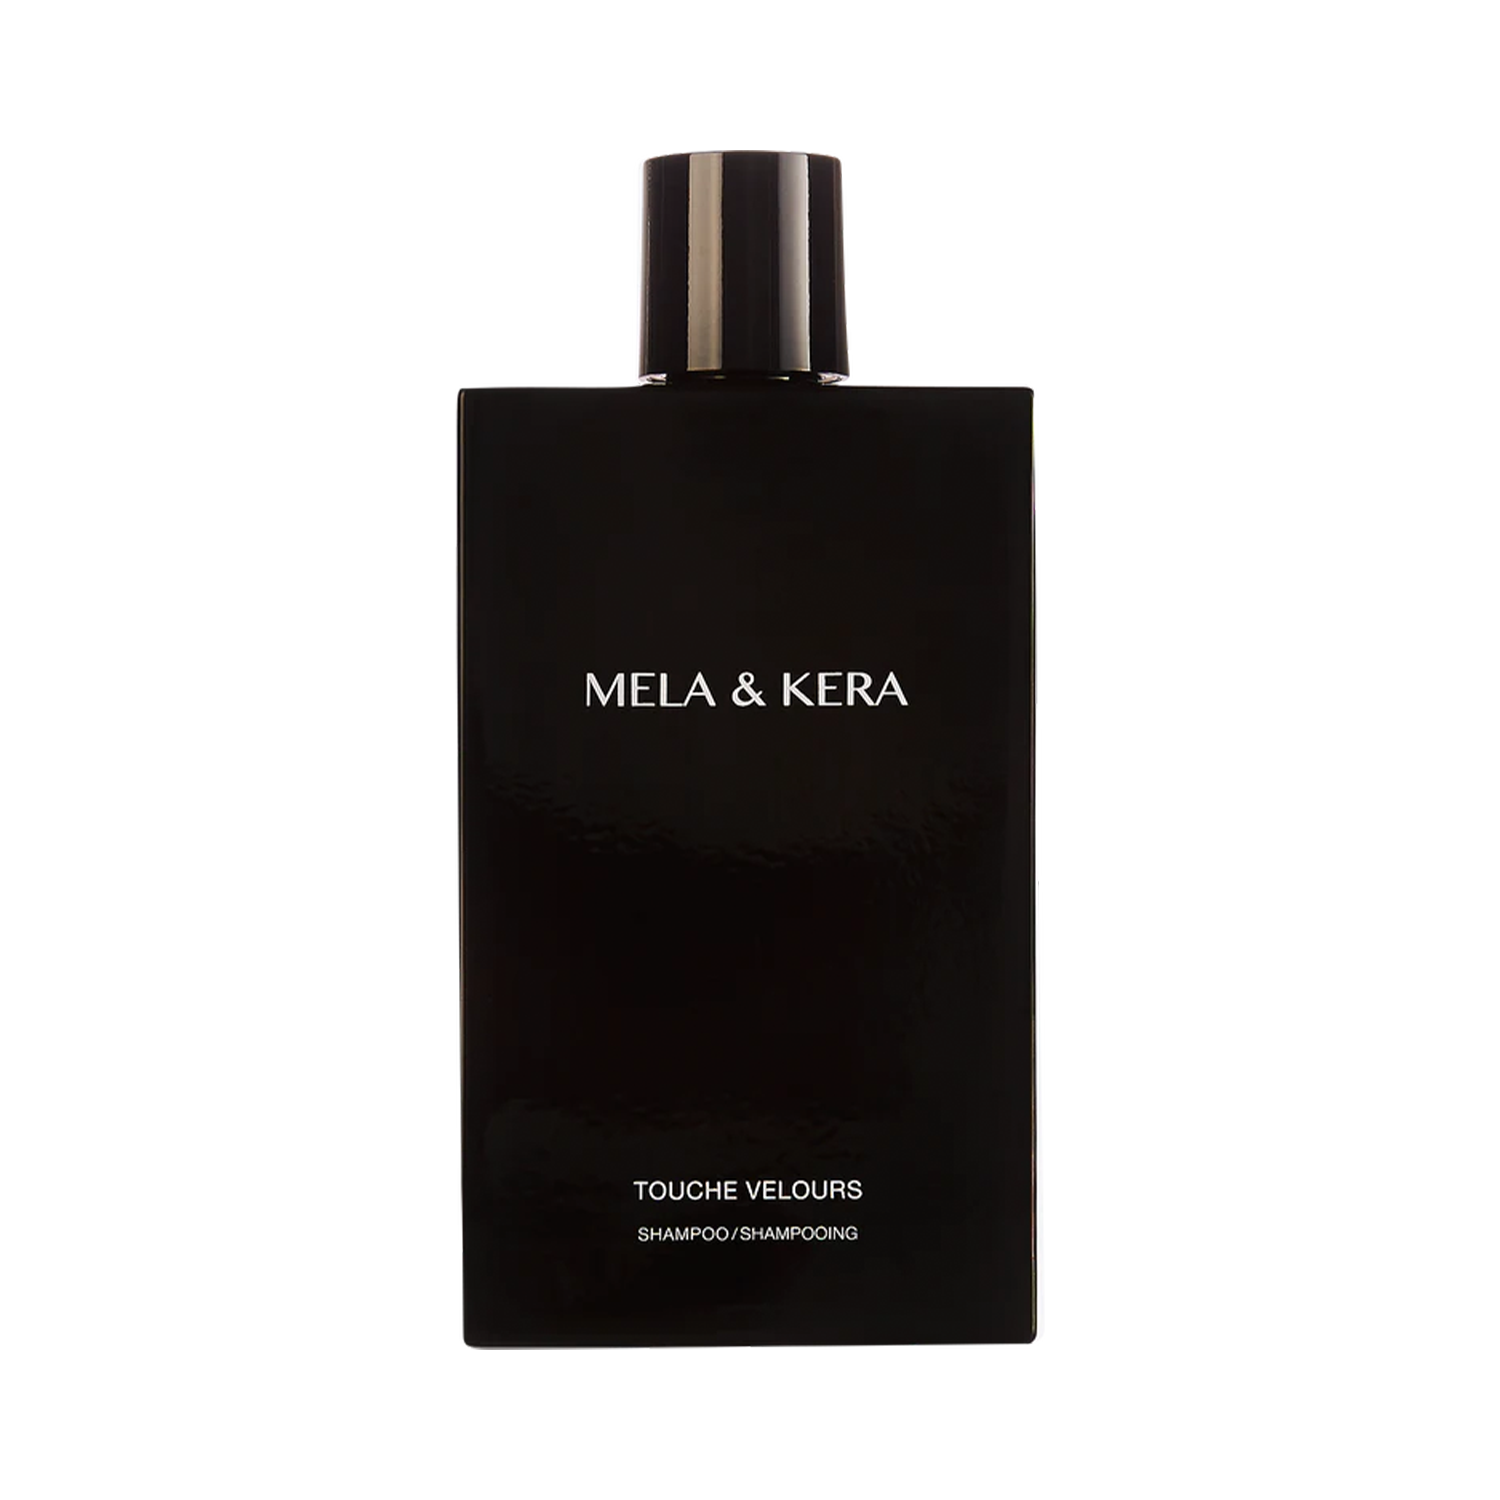 Mela & Kera - Touche velours shampoo